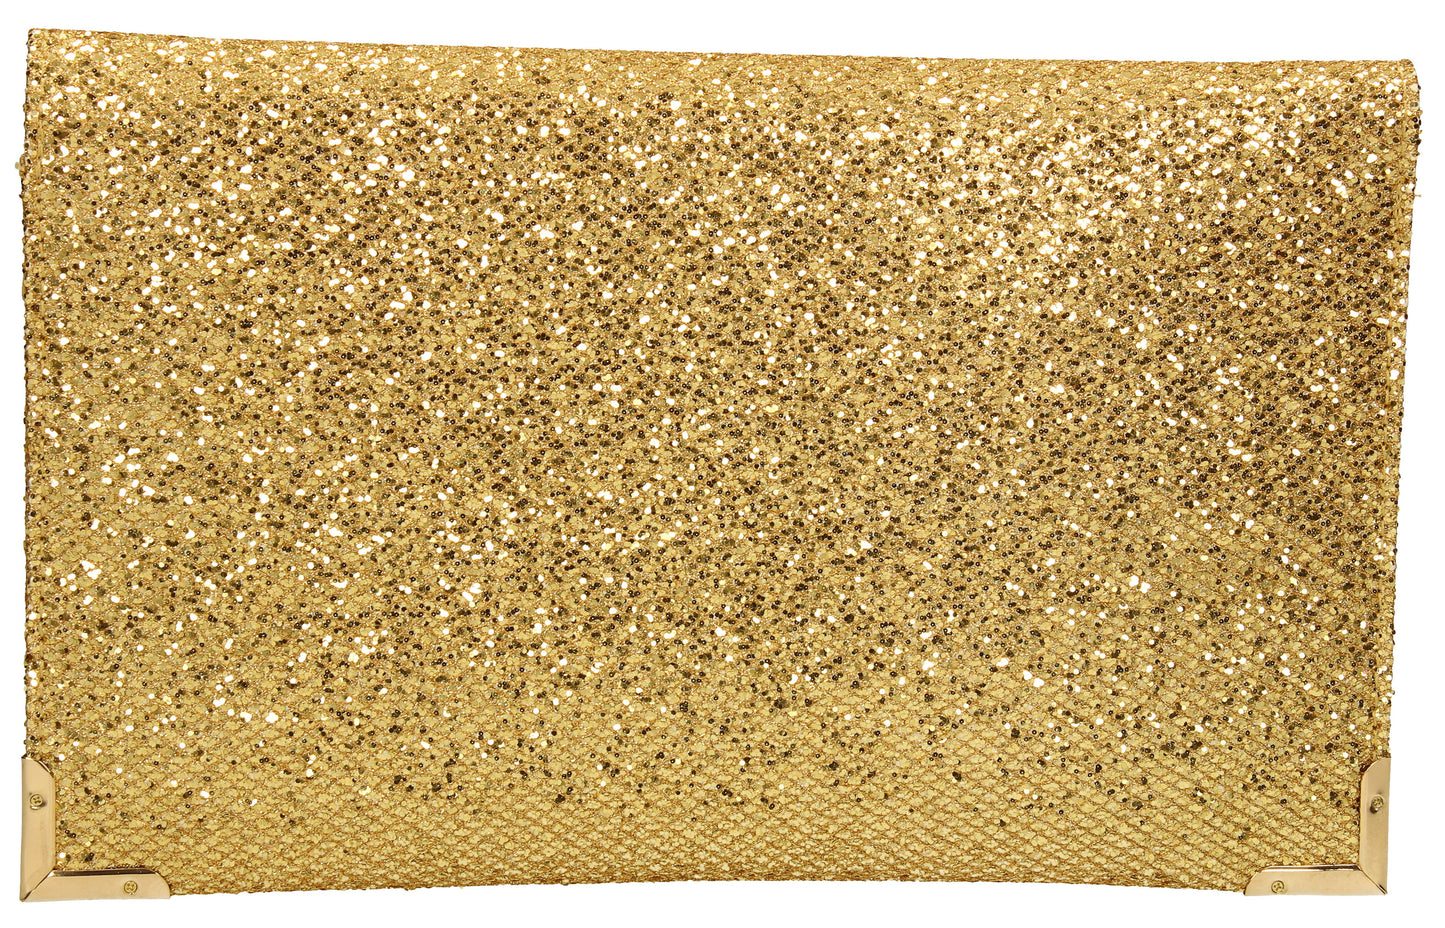 SWANKYSWANS Korie Clutch Bag Gold Cute Cheap Clutch Bag For Weddings School and Work